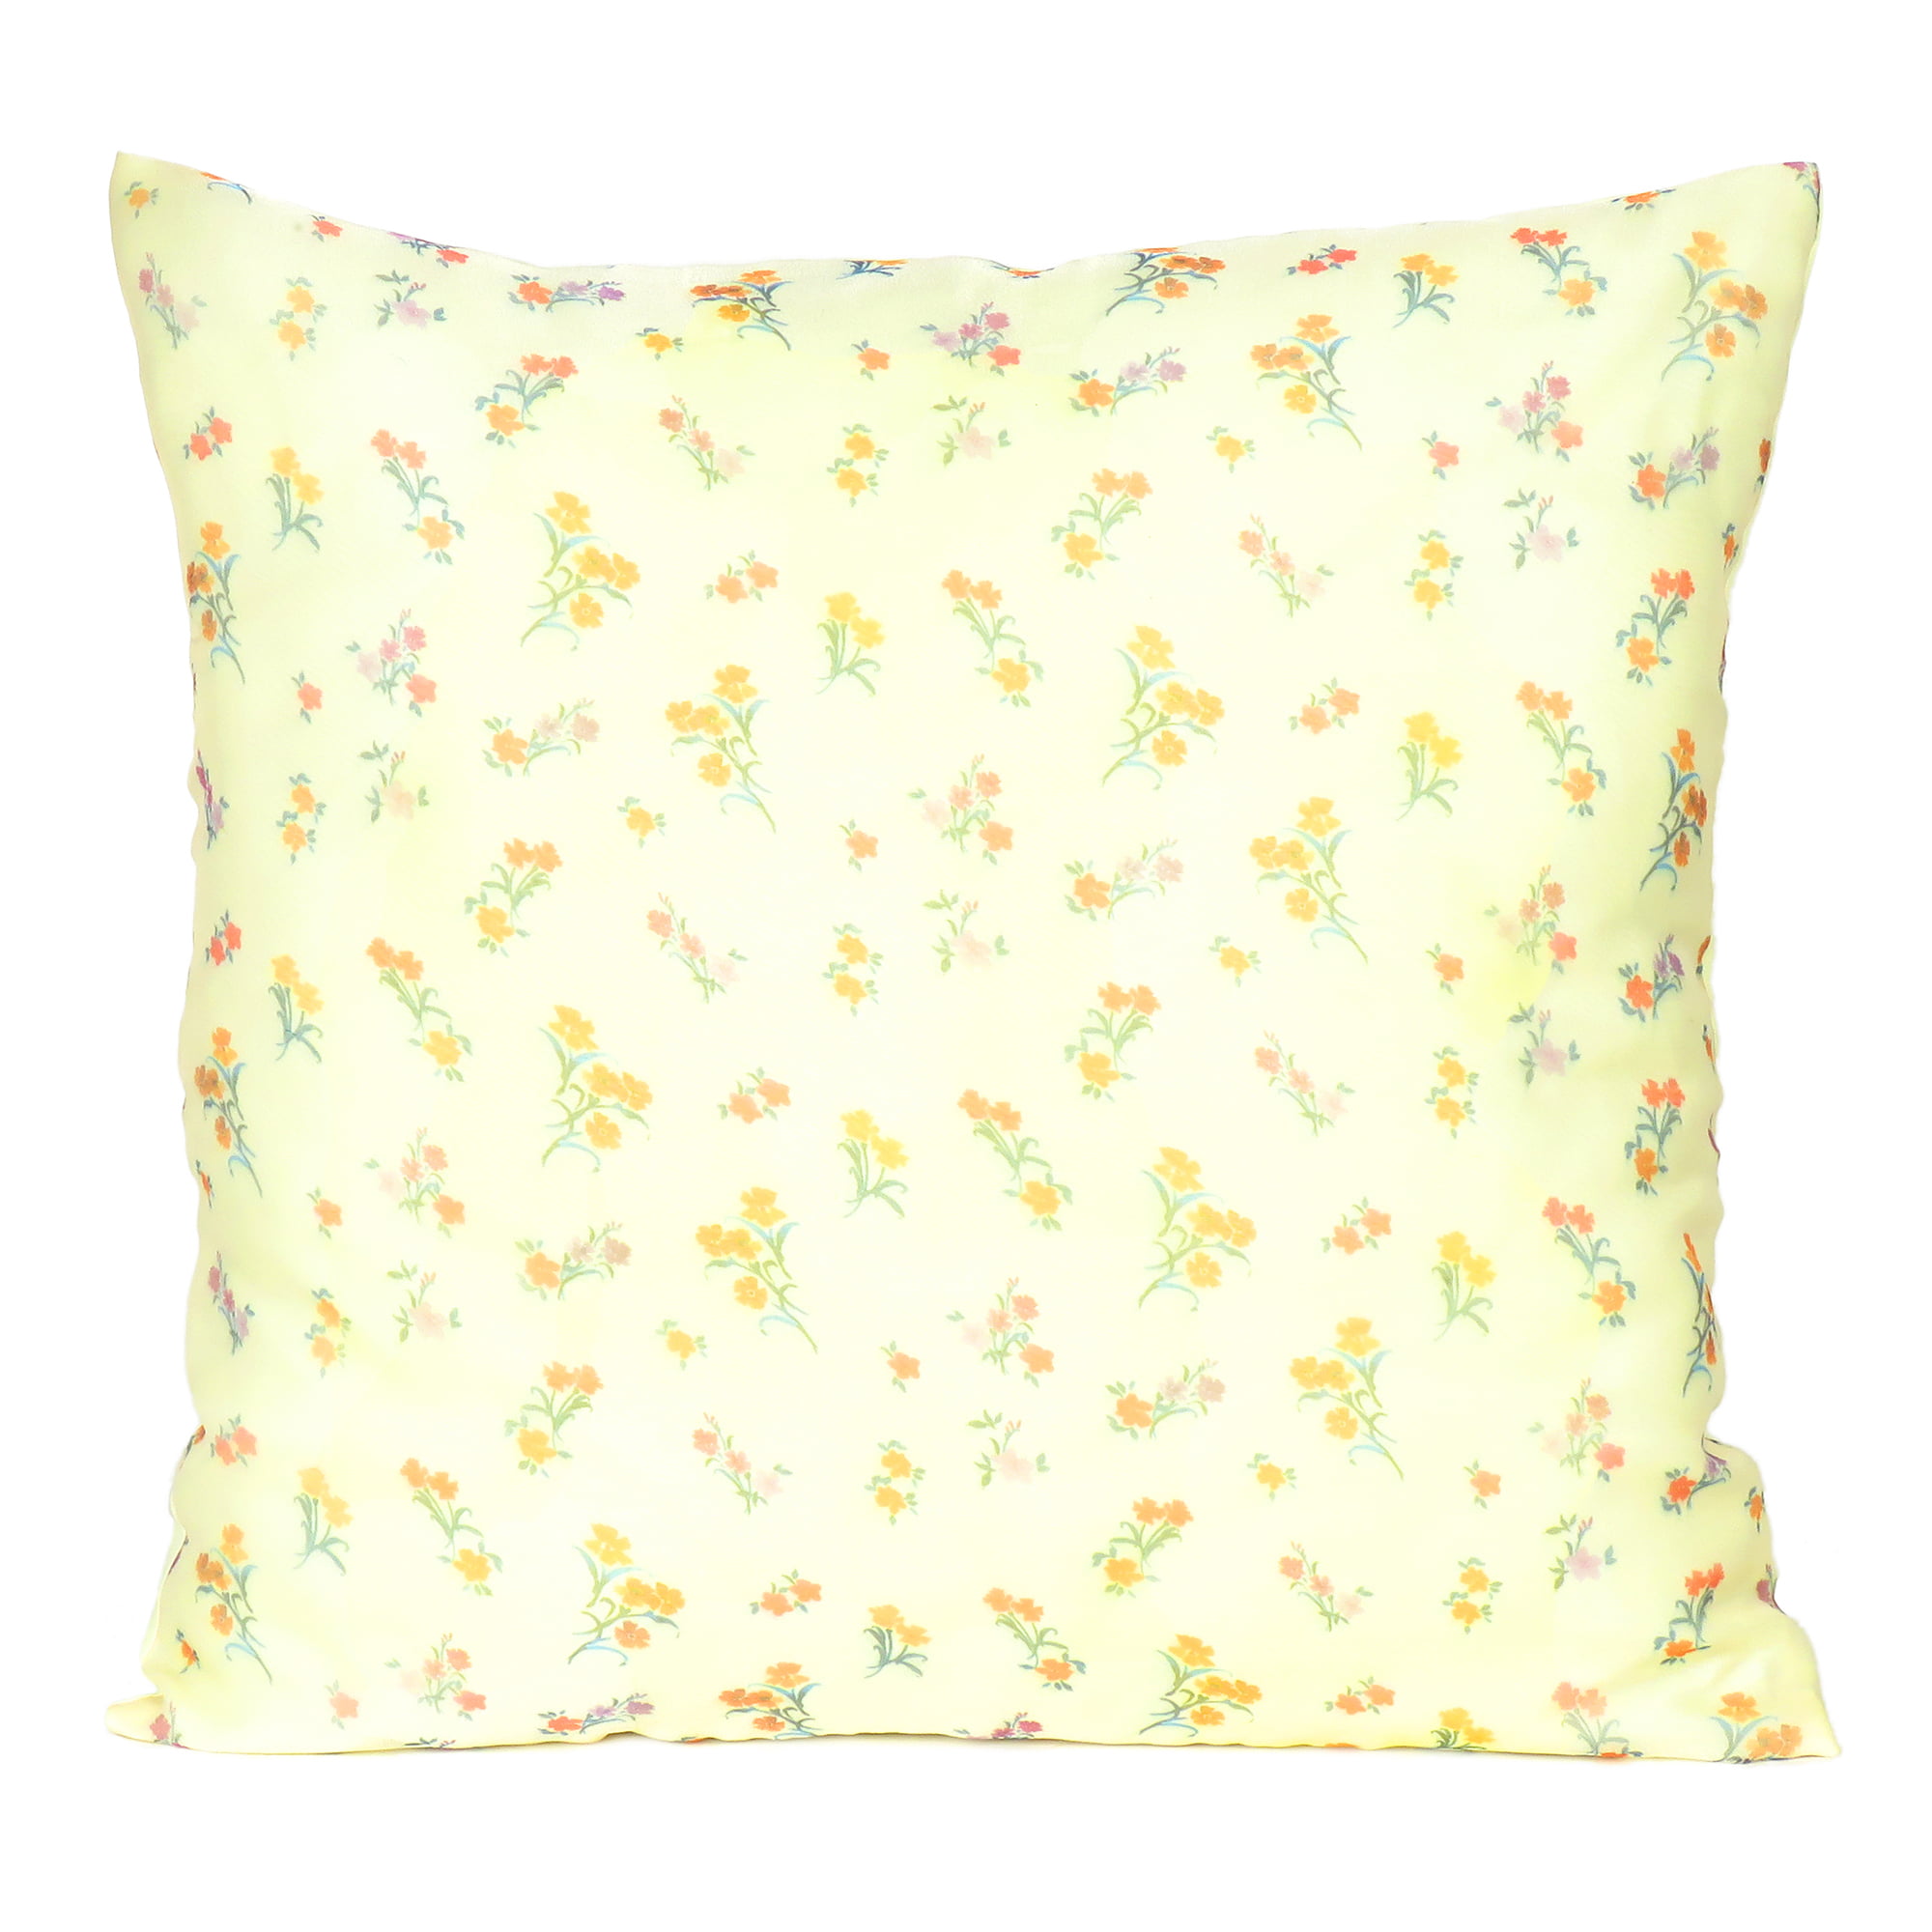 Decorative Tassel Cushion Cover Throw Home Decor Poly Dupion 2 Pcs Pillow Case